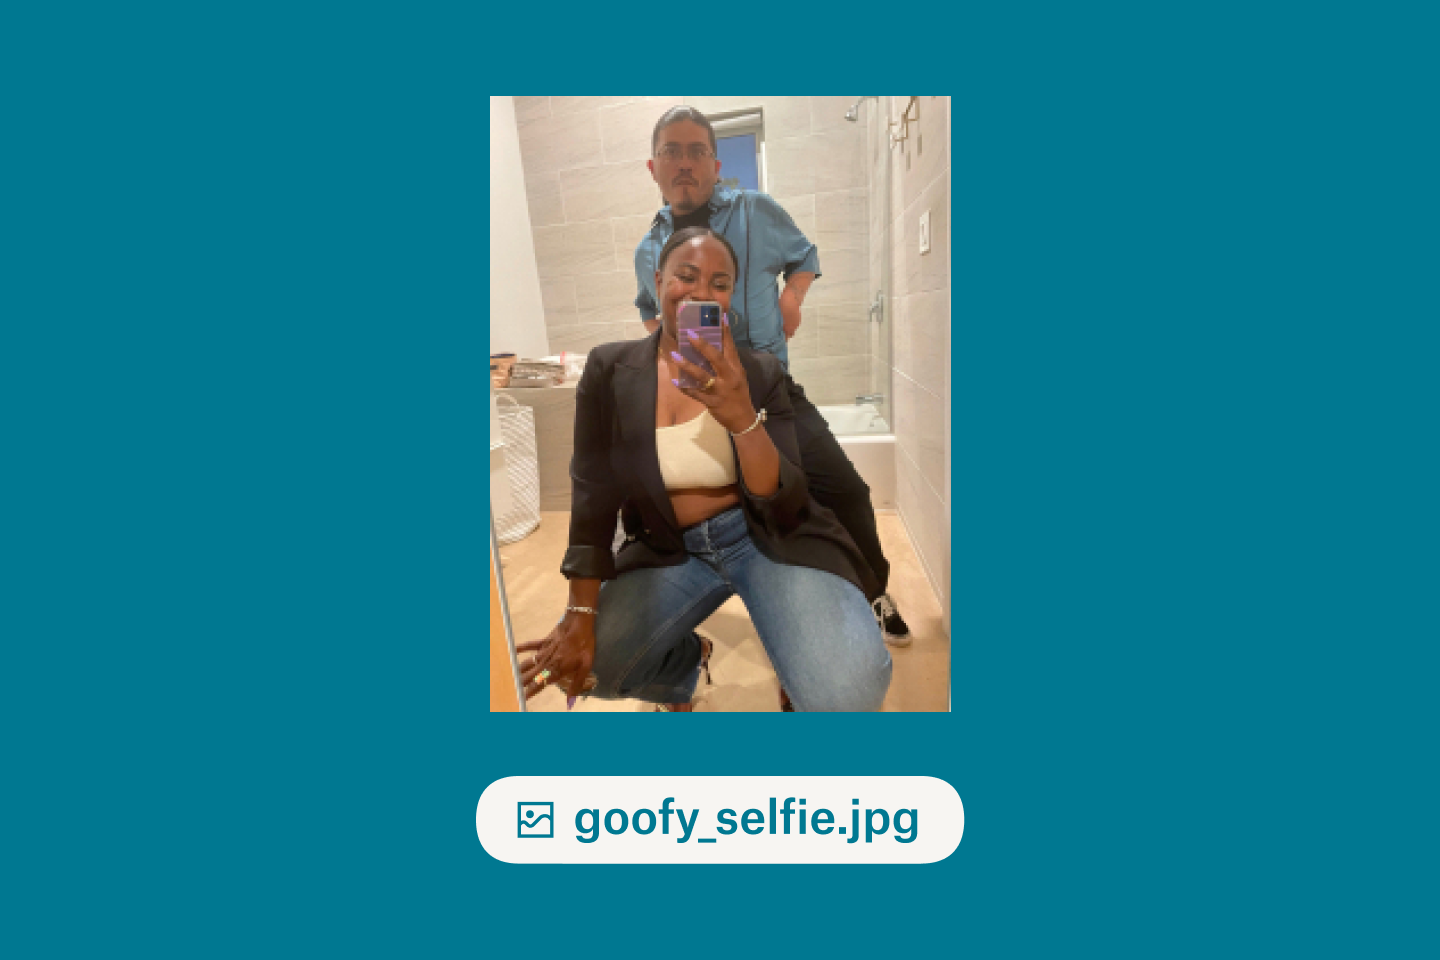 A man and a woman taking a goofy selfie in a bathroom mirror